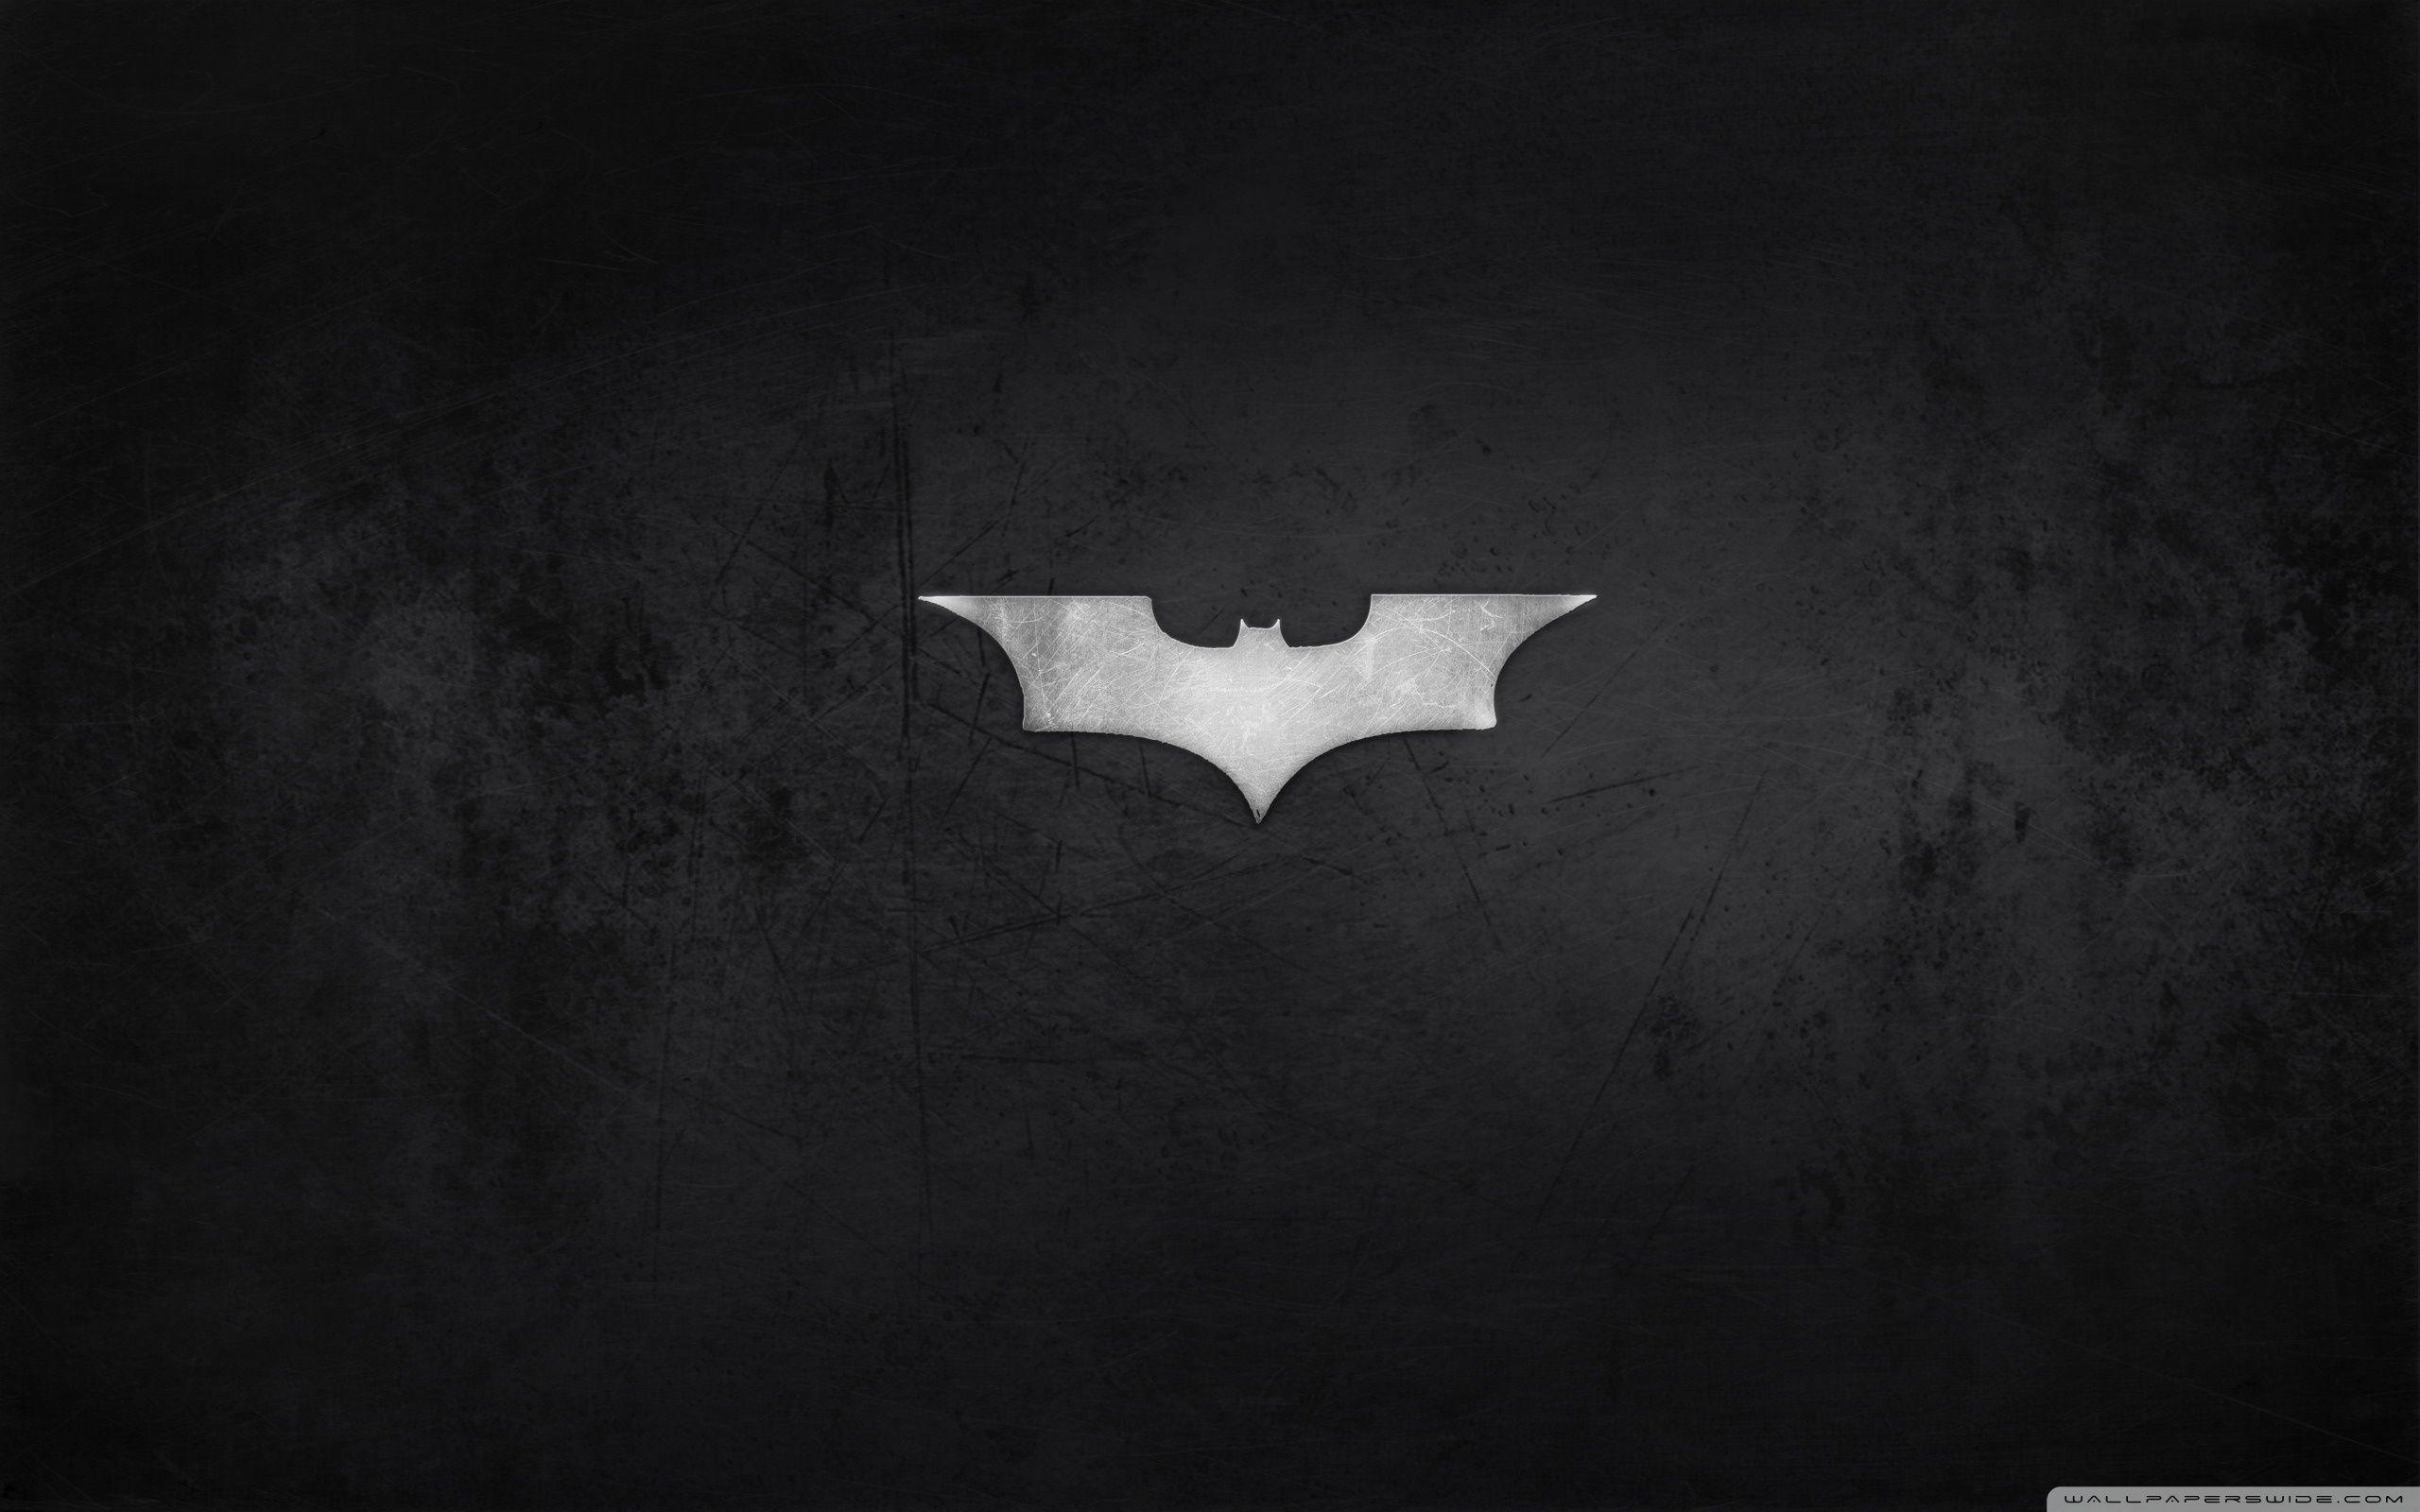 The Batman Monochrome Live Wallpaper - MoeWalls